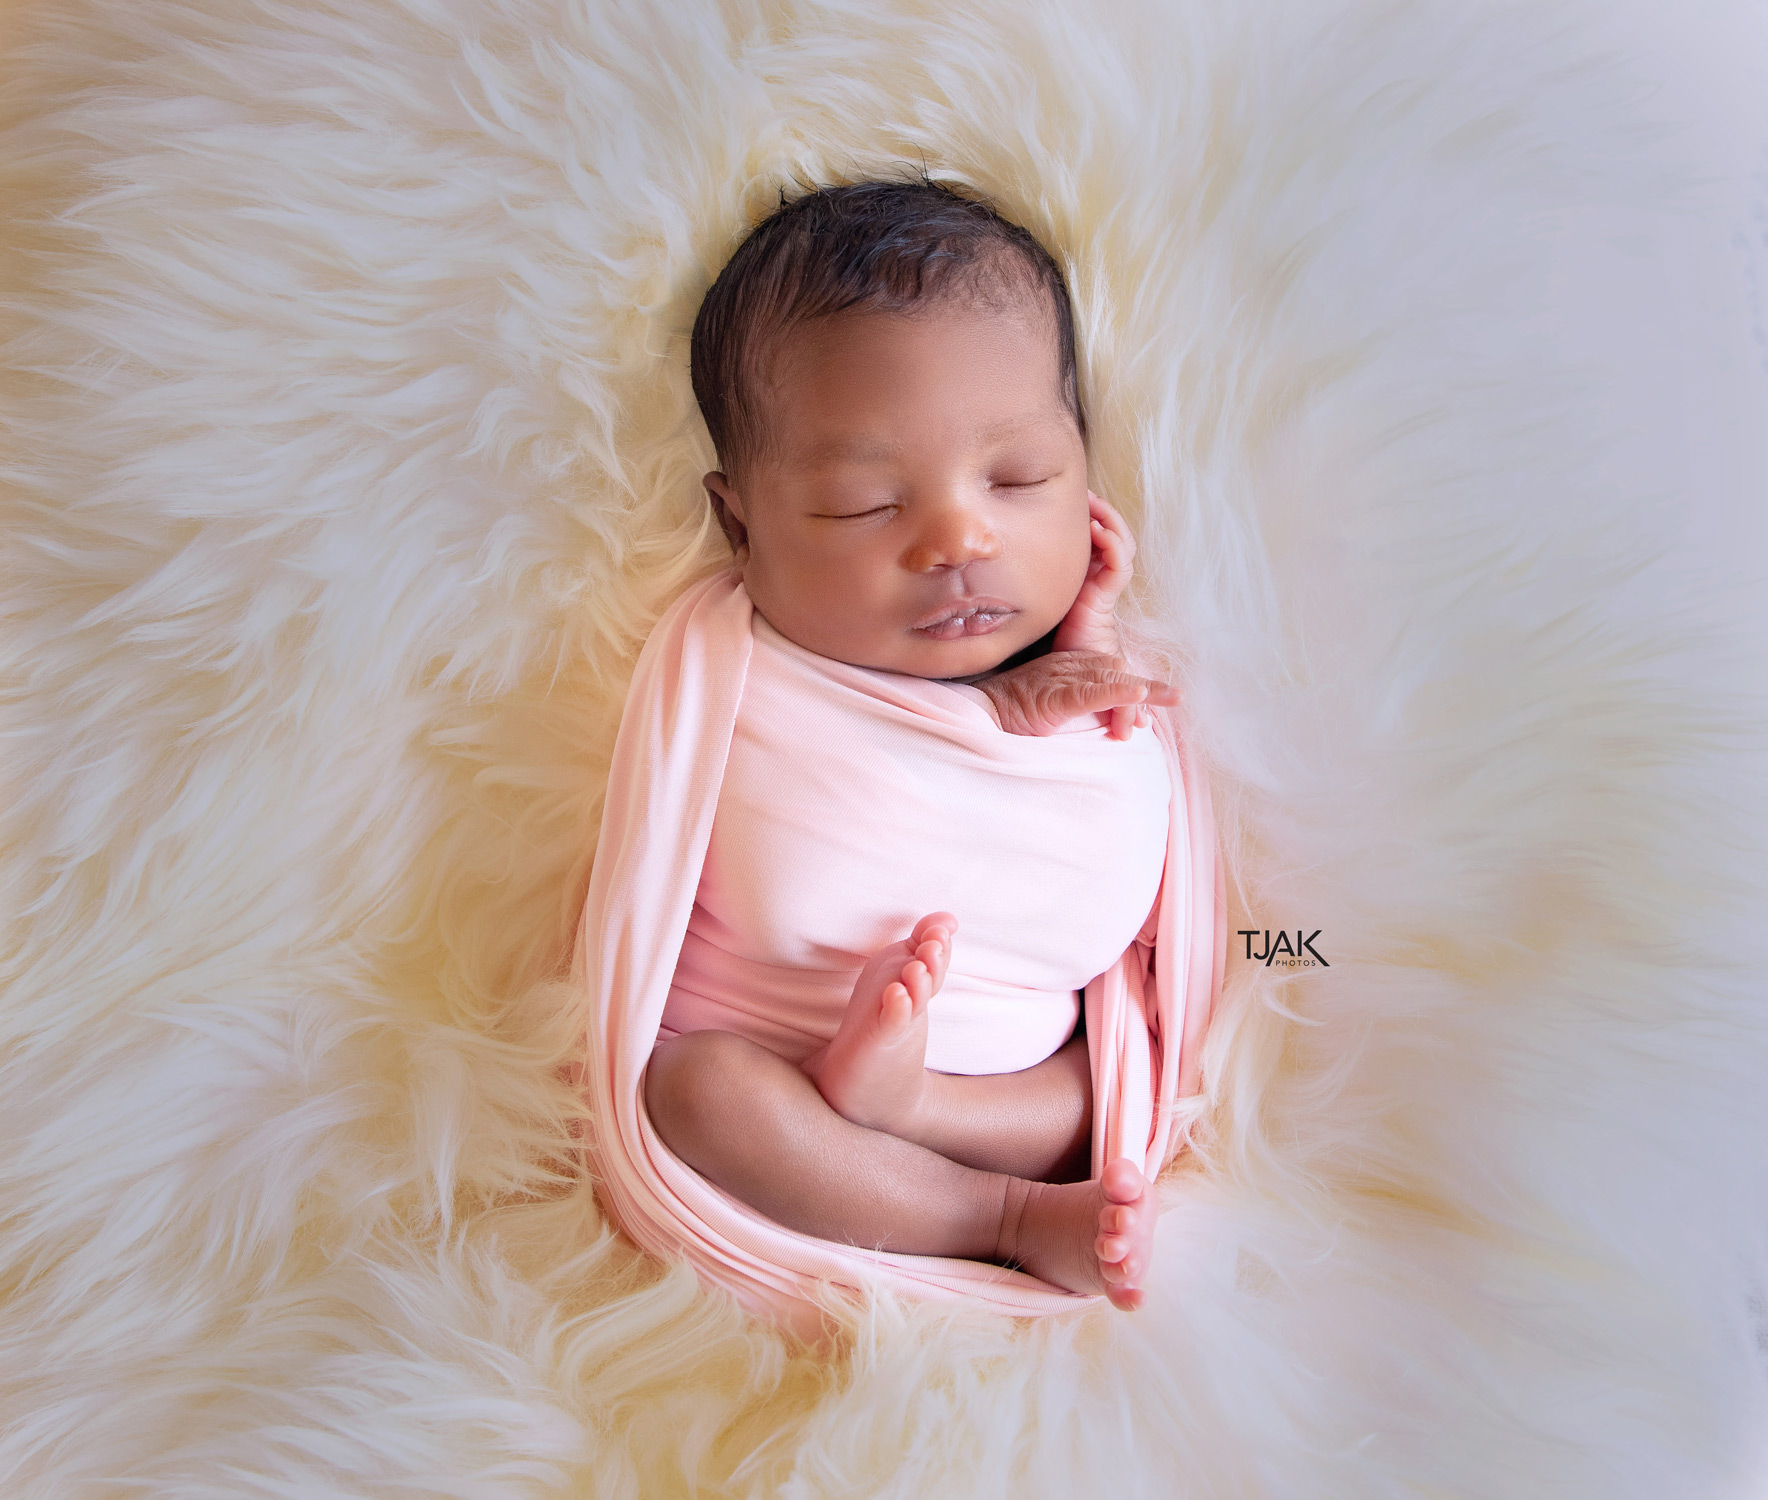 Newborn sleeping on a fur blanket for a newborn photography